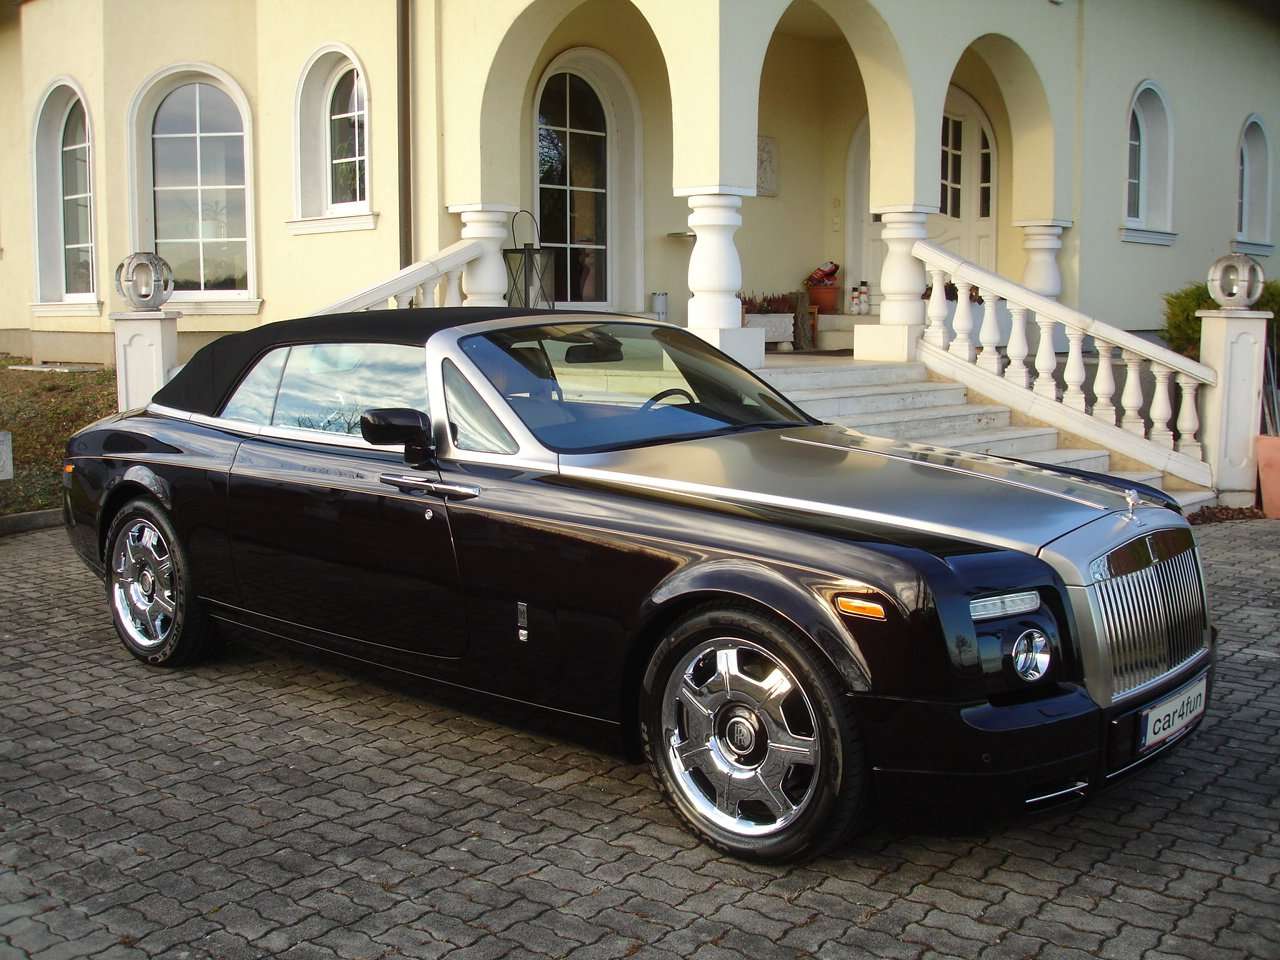 Rolls-Royce Phantom Drophead Convertible in Black used in Pfaffstätten for € 259,900.-